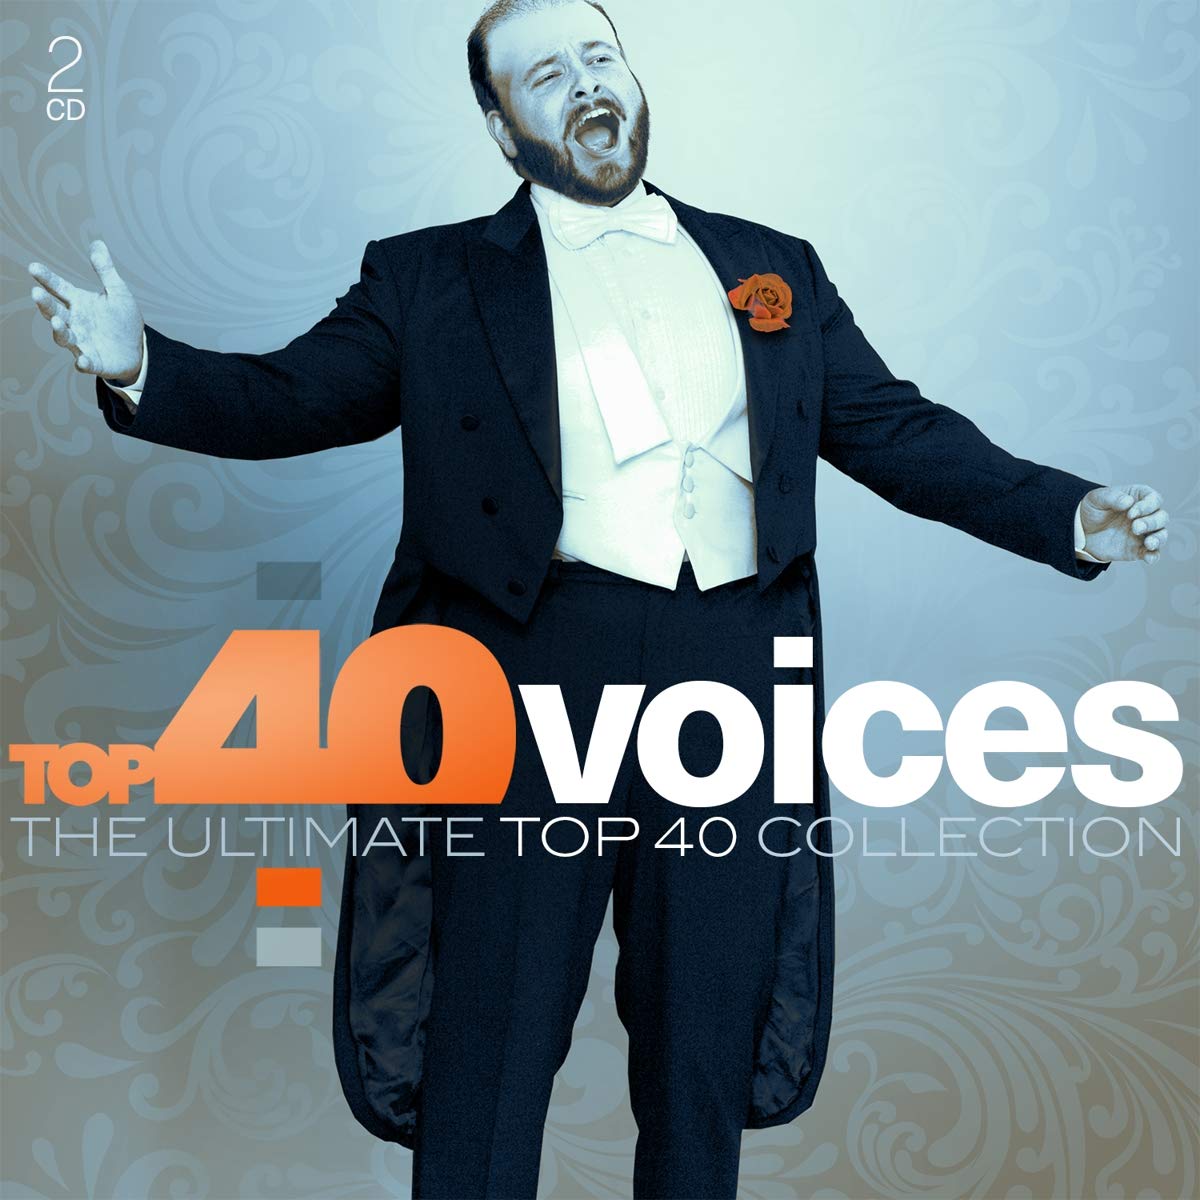 Top 40 Voices image